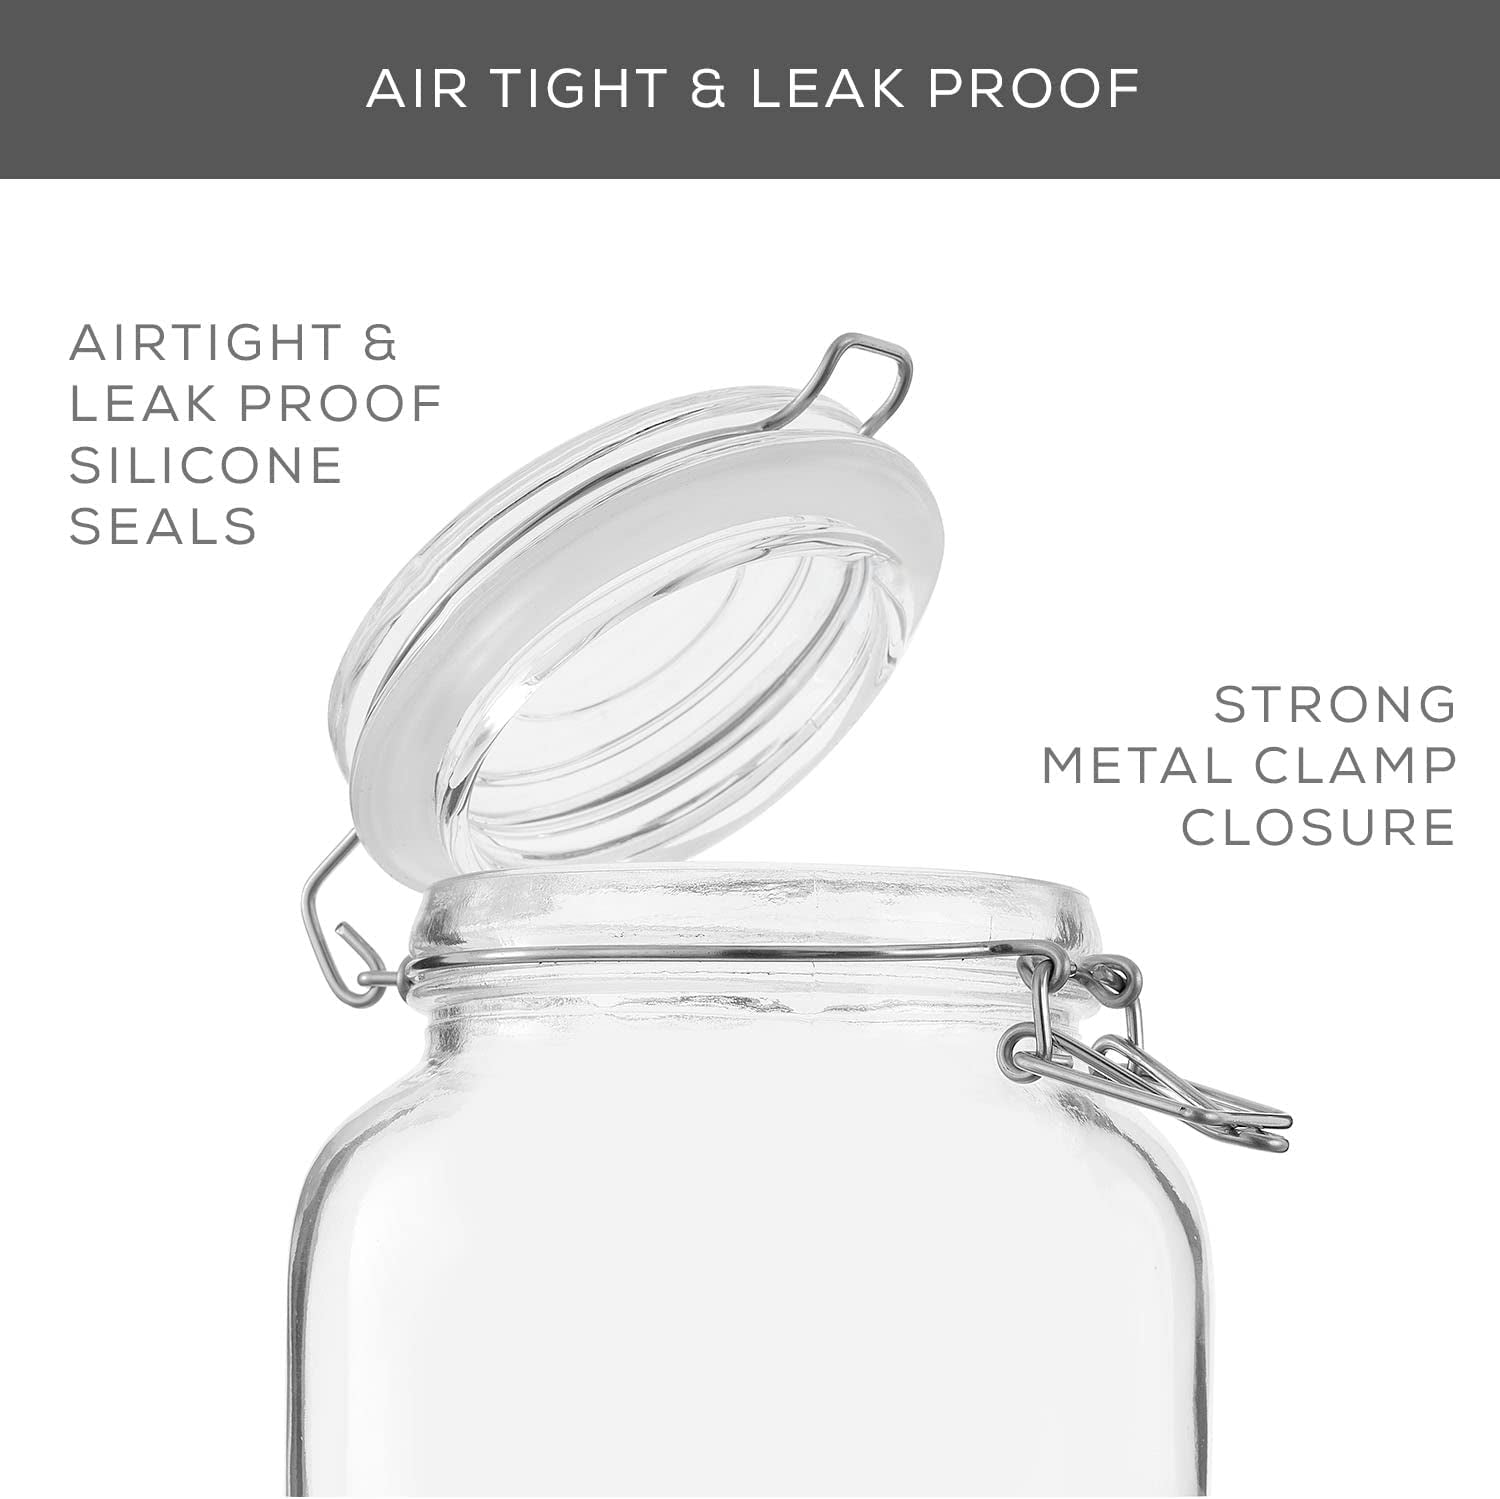 4.5 Ounce Mini Glass Jars with Airtight Glass Lids,Set of 4